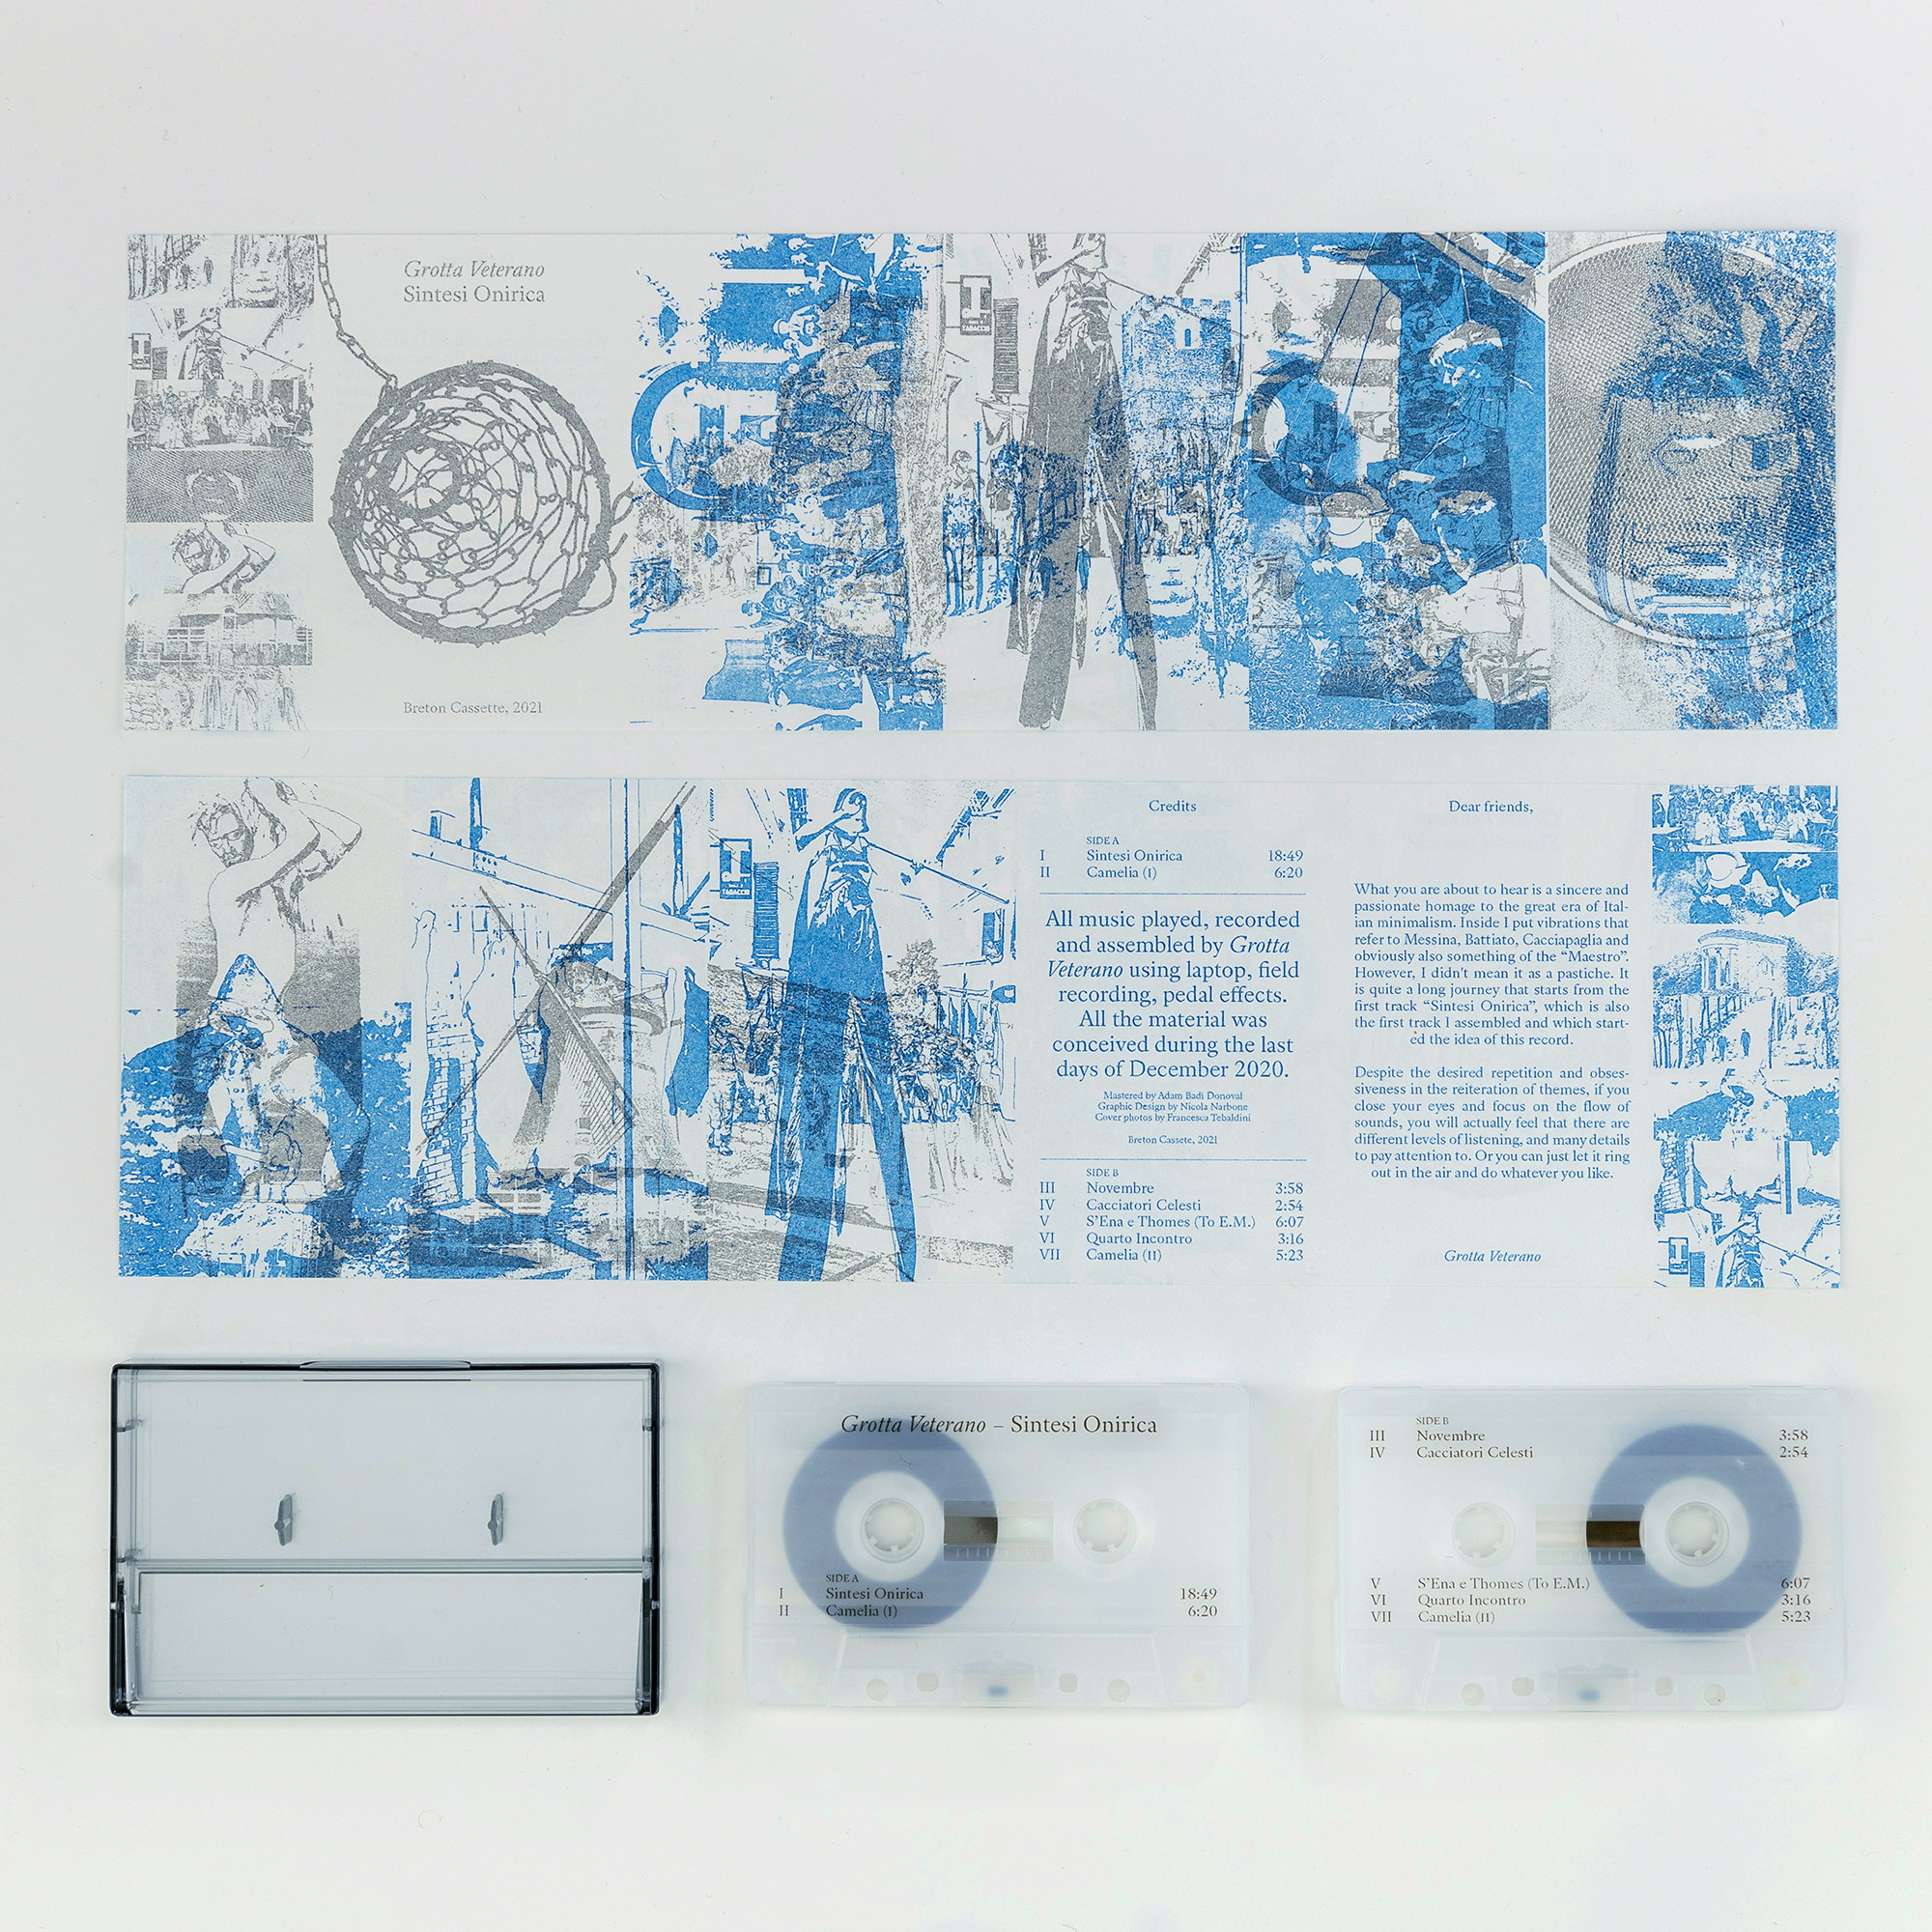 Sintesi Onirica. Cassette tape with risographprinted card